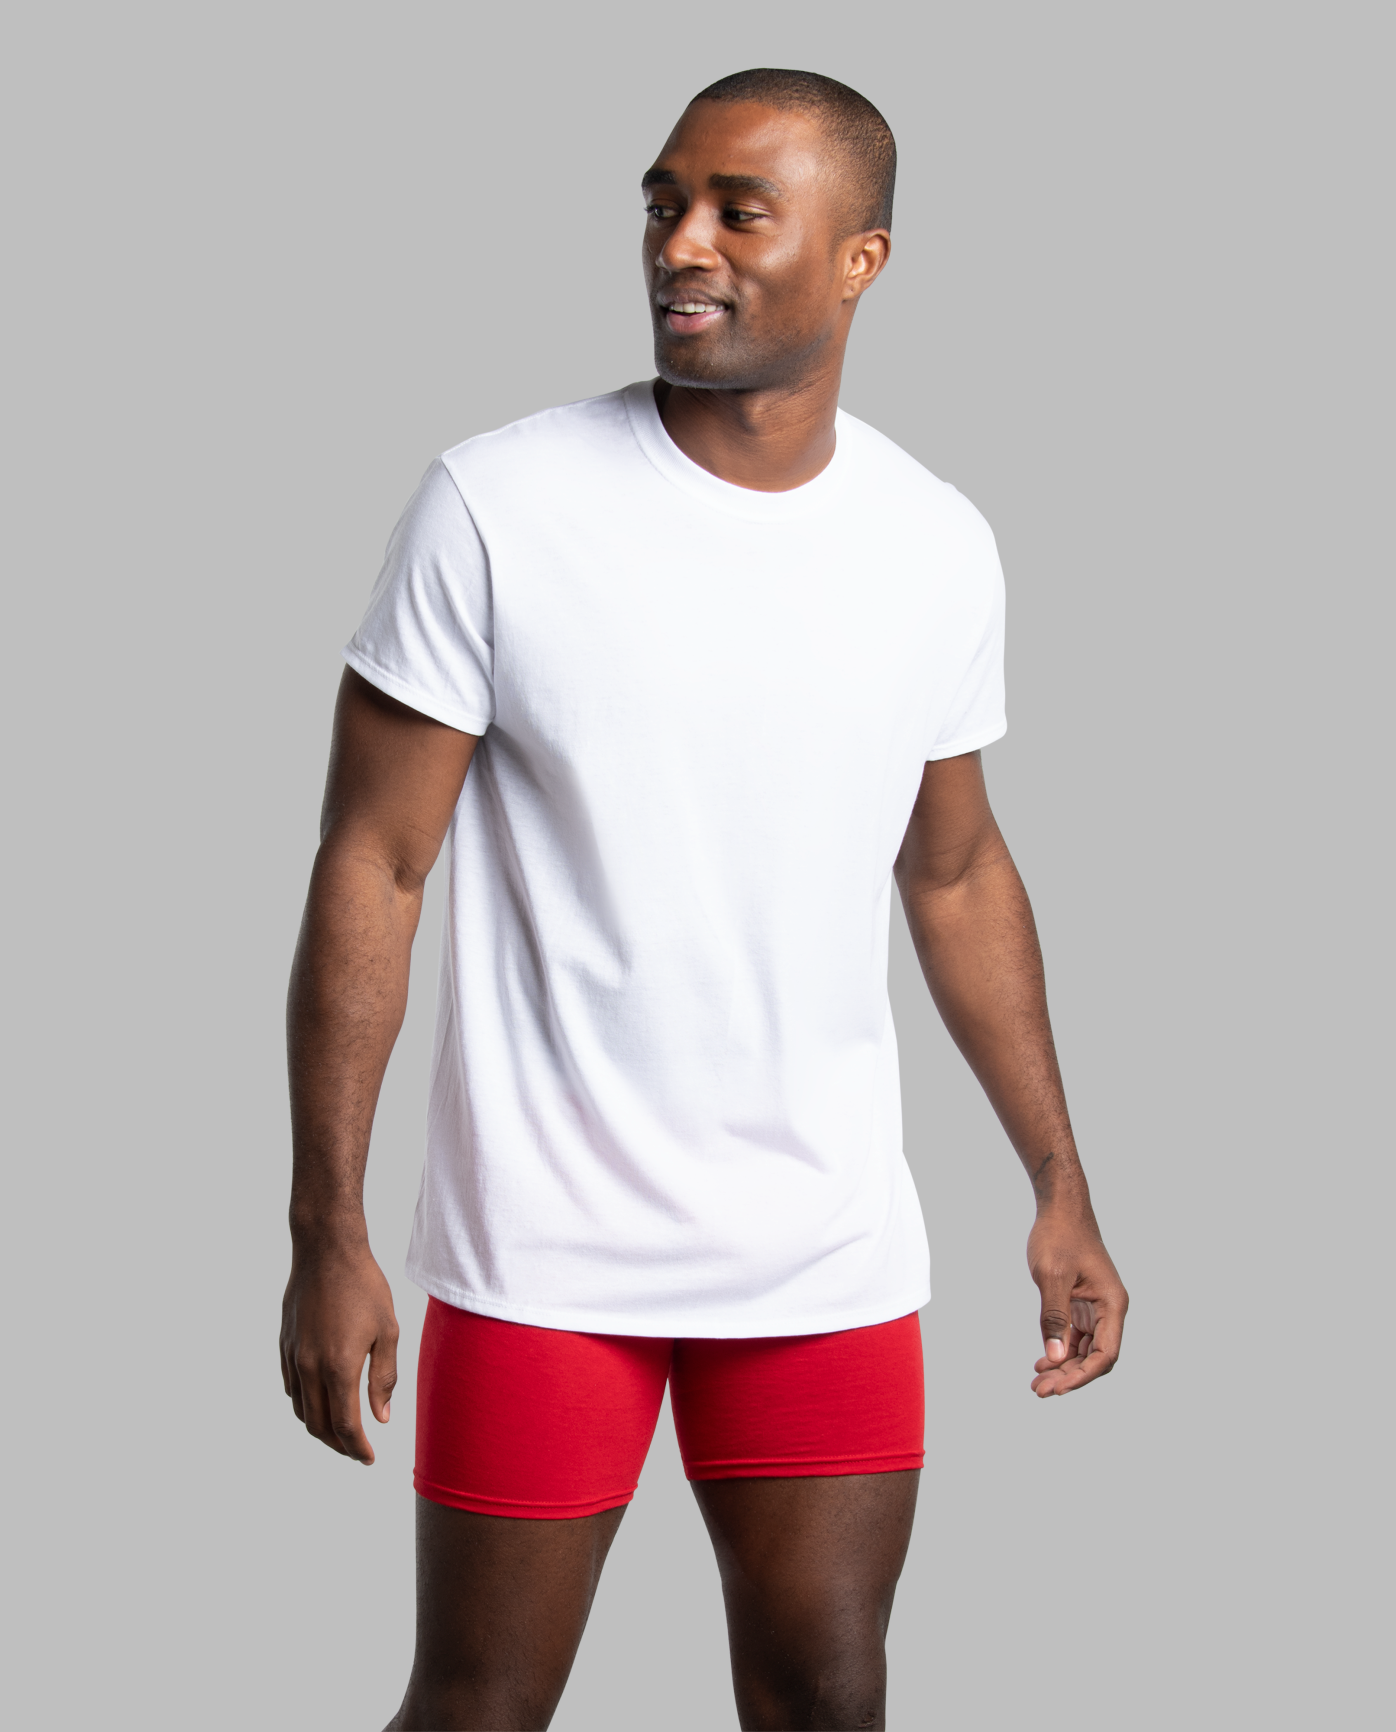 Men's Short Sleeve Active Cotton White Crew T-Shirts